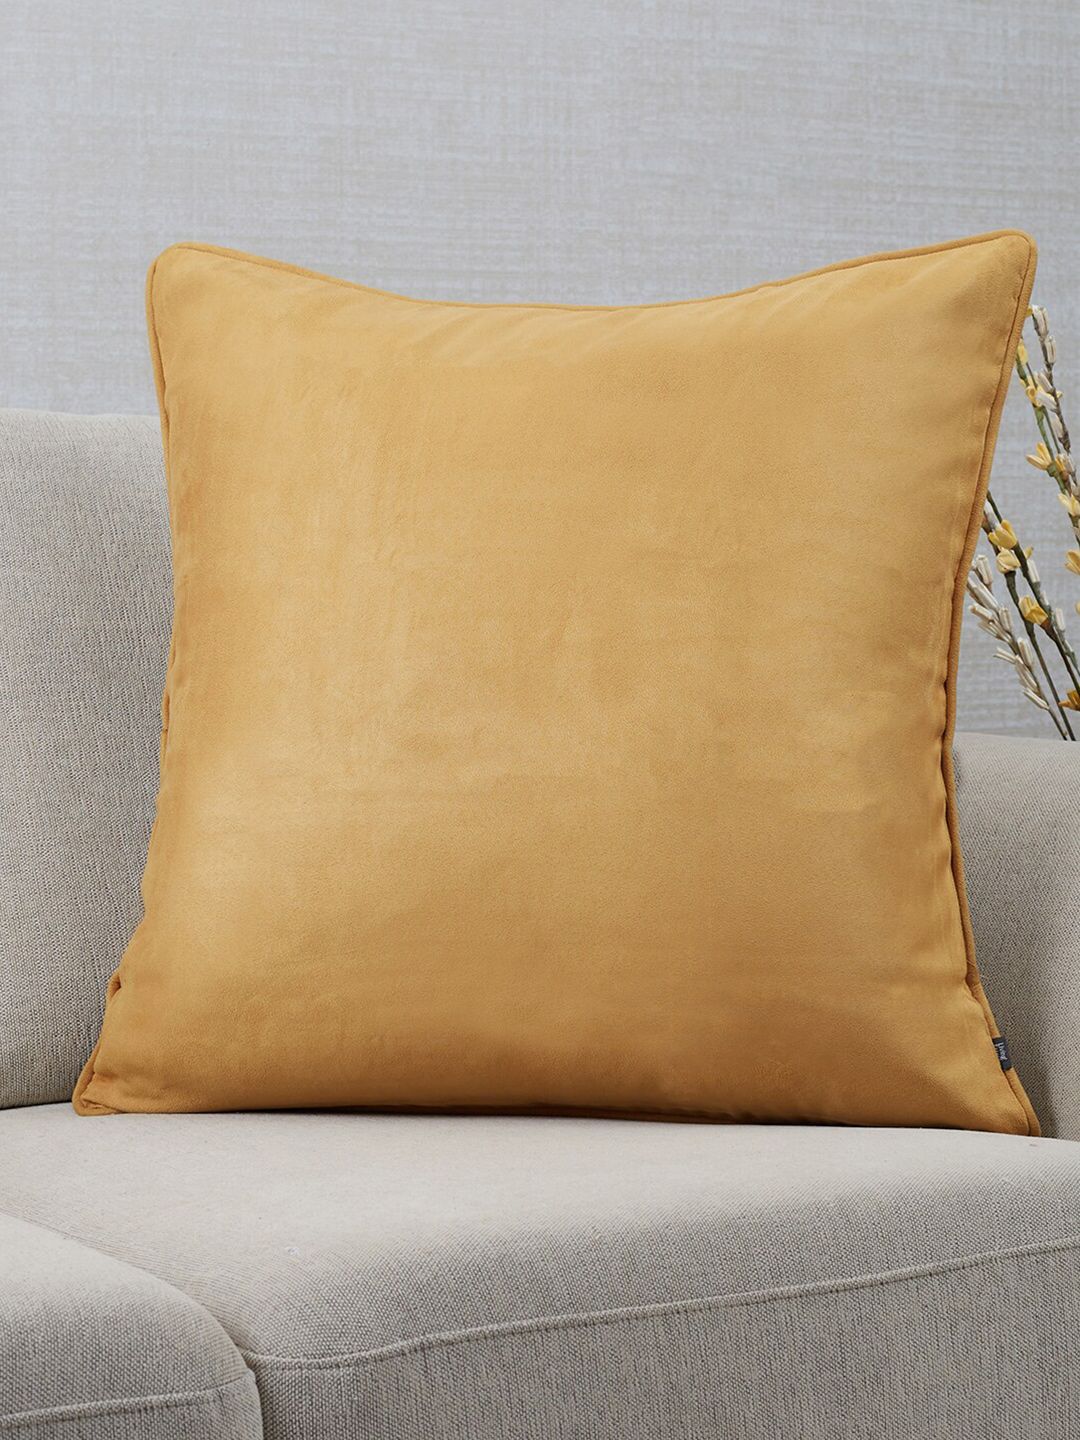 HomeTown Mustard & White Reversible Velvet Square Cushion Cover Price in India